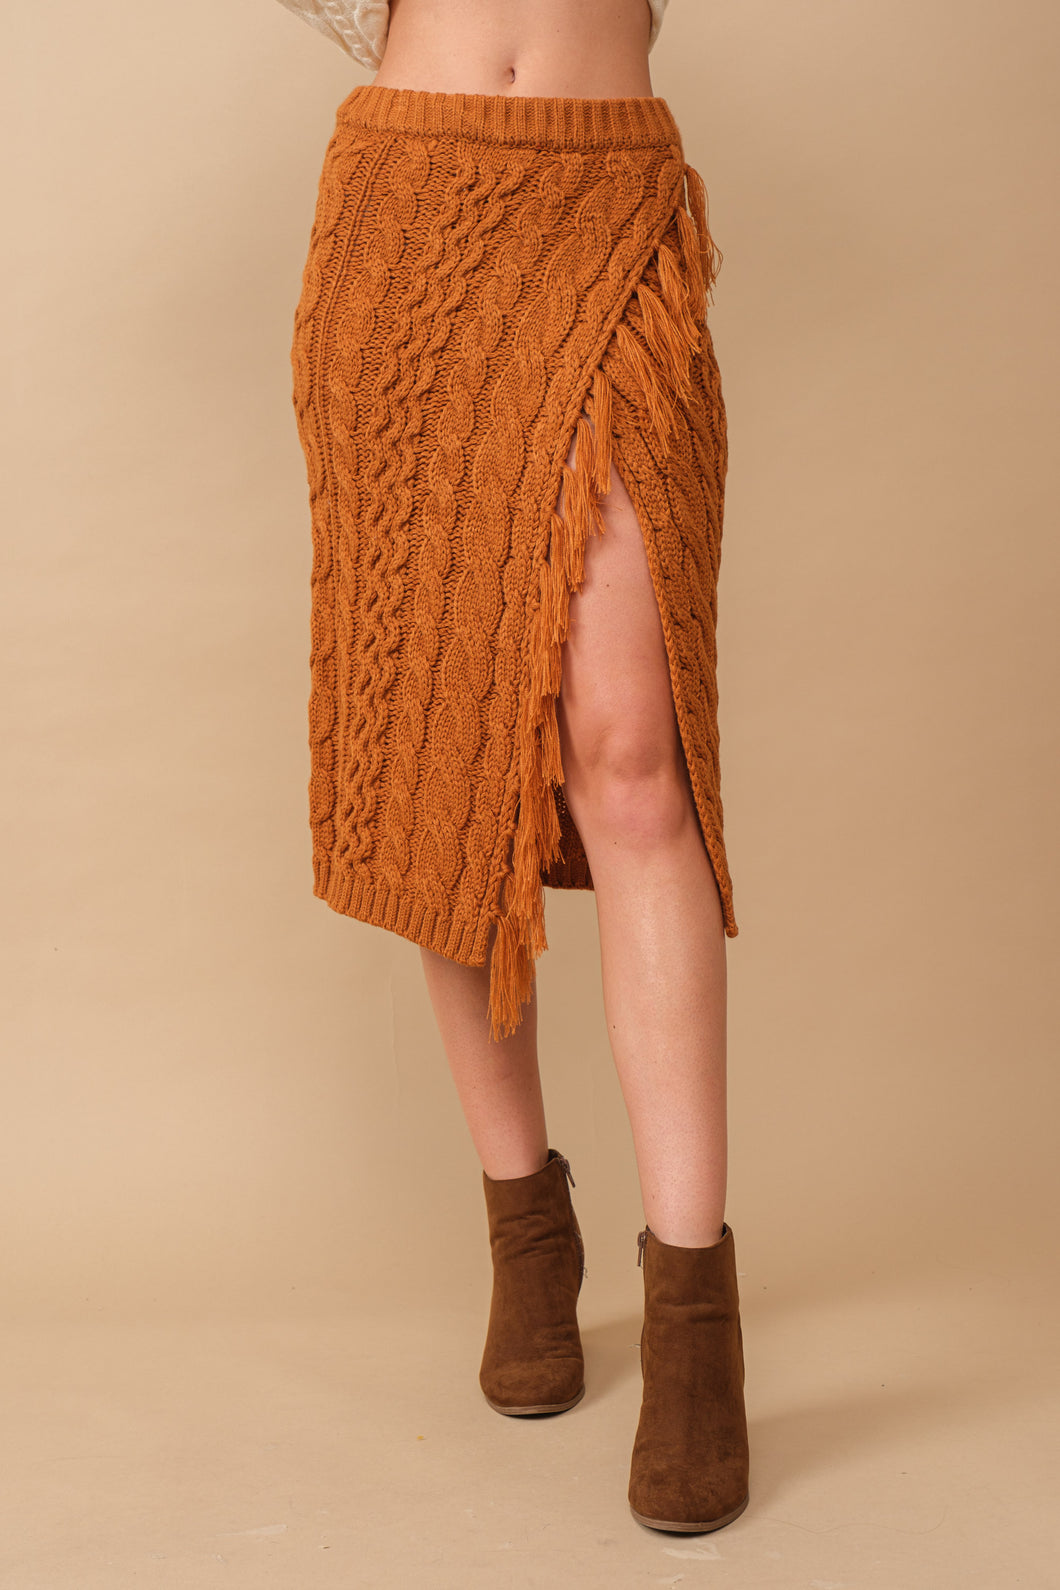 Pumpkin Spice Knit Fringe Skirt